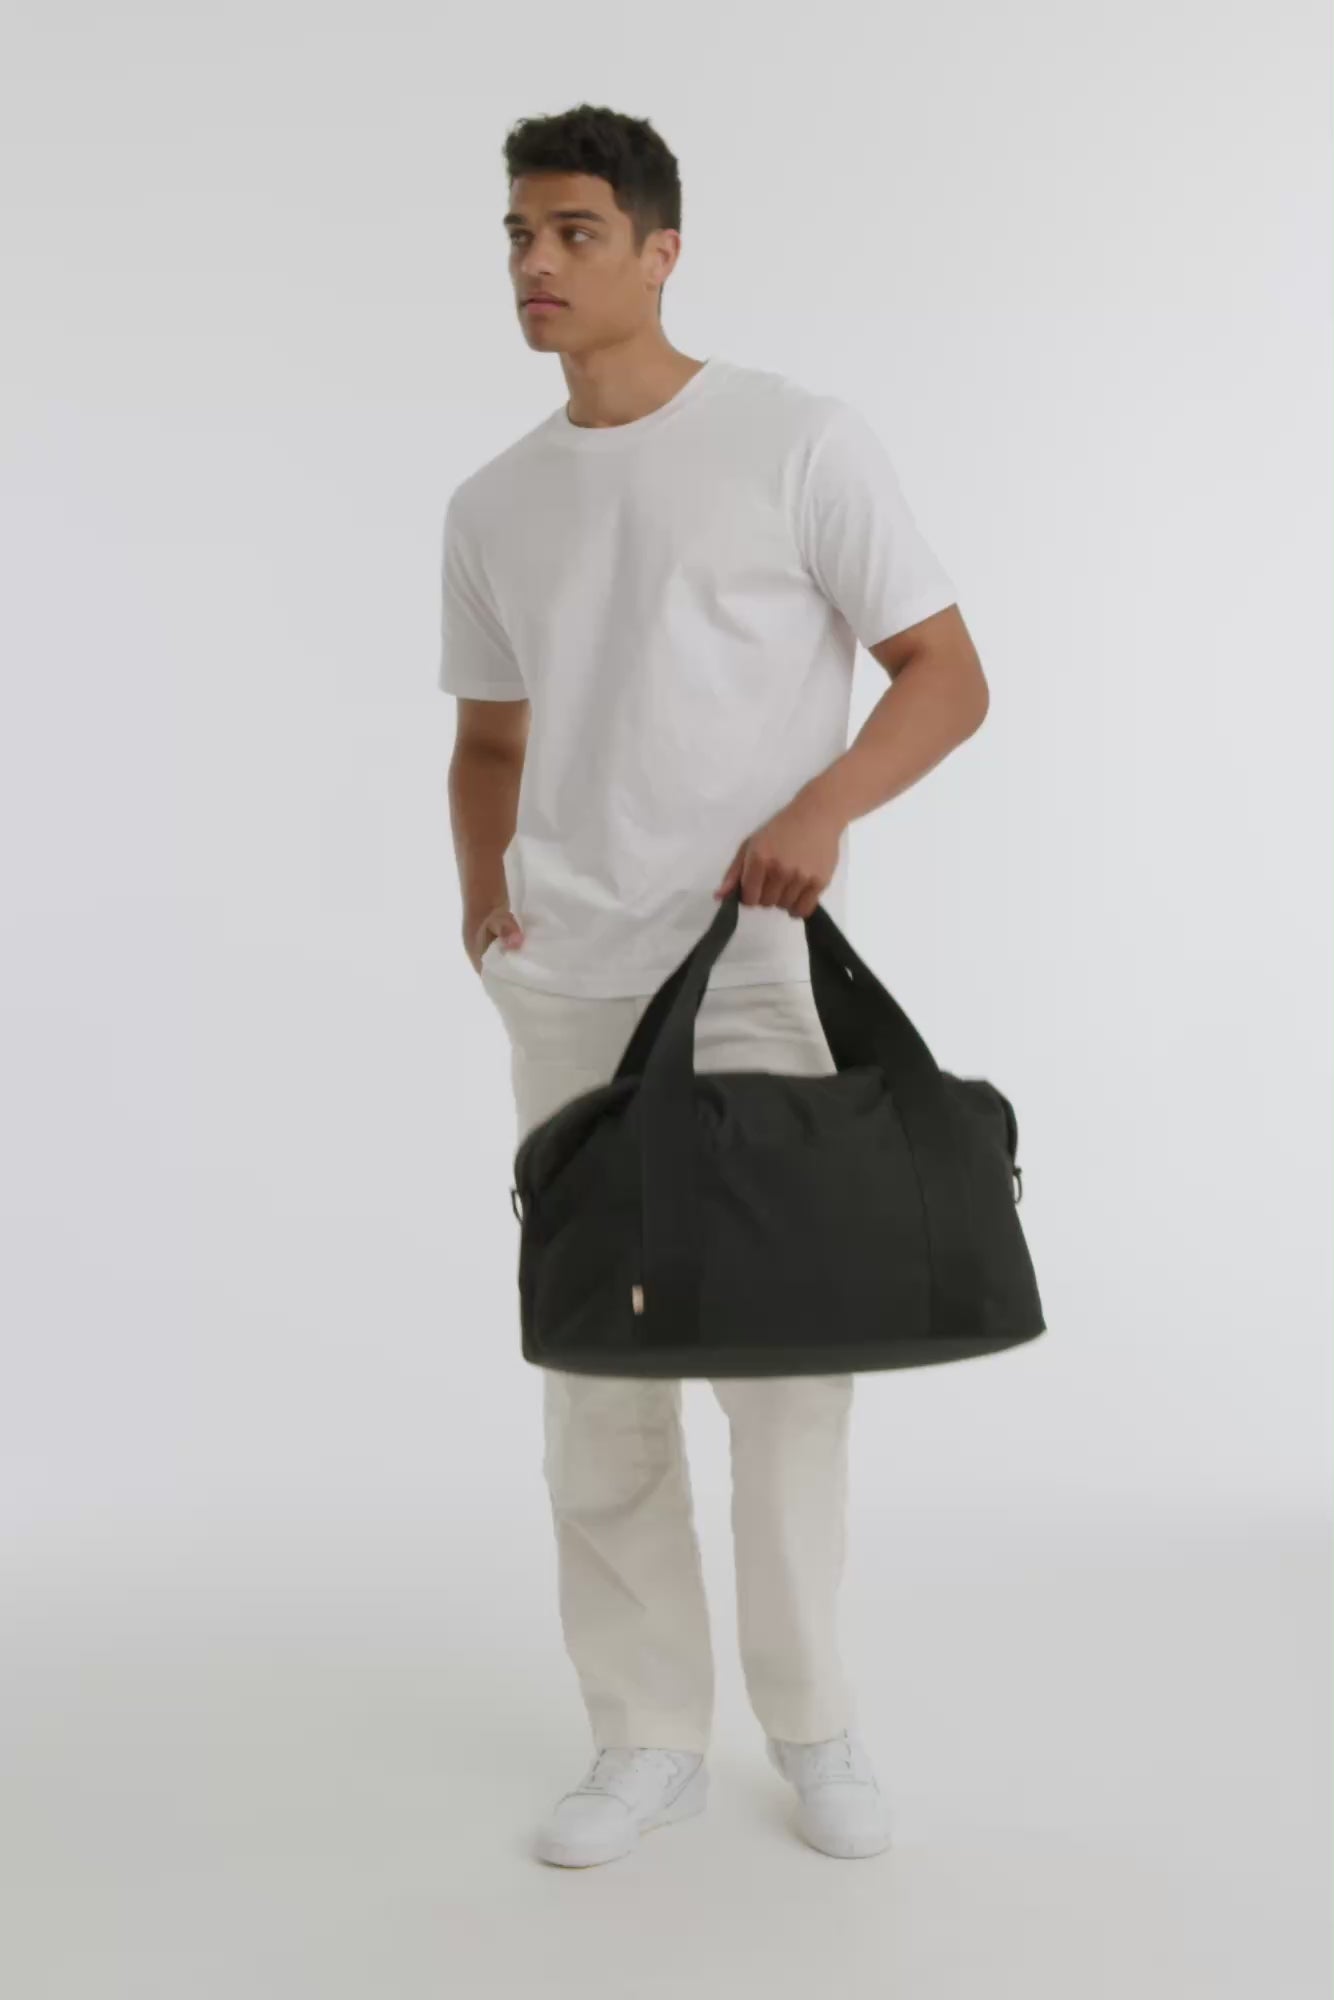 Béis The Convertible Duffle Bag in Black